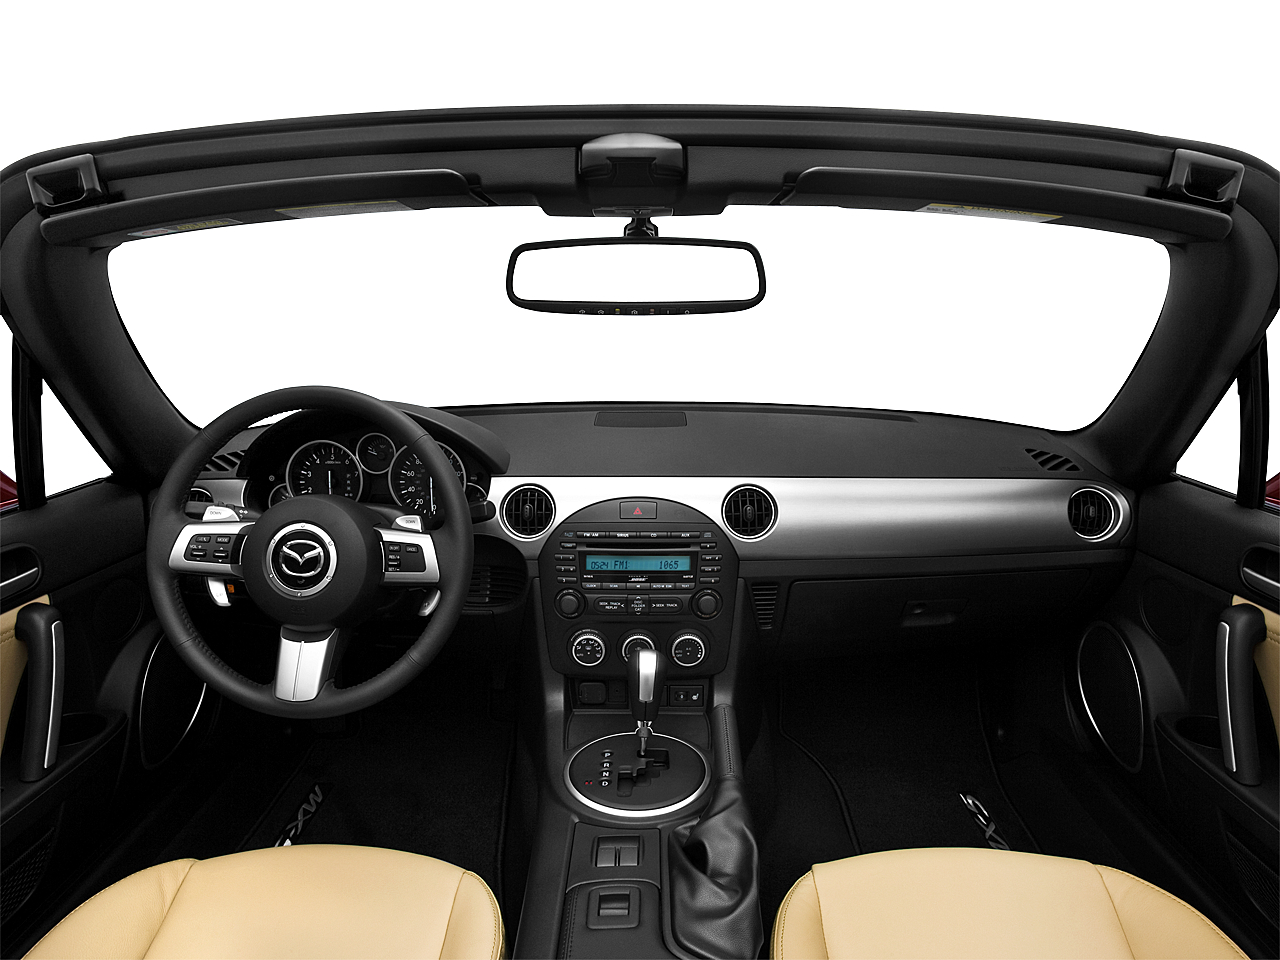 2010 Mazda MX-5 Miata Grand Touring 2dr Convertible 6A - Research -  GrooveCar